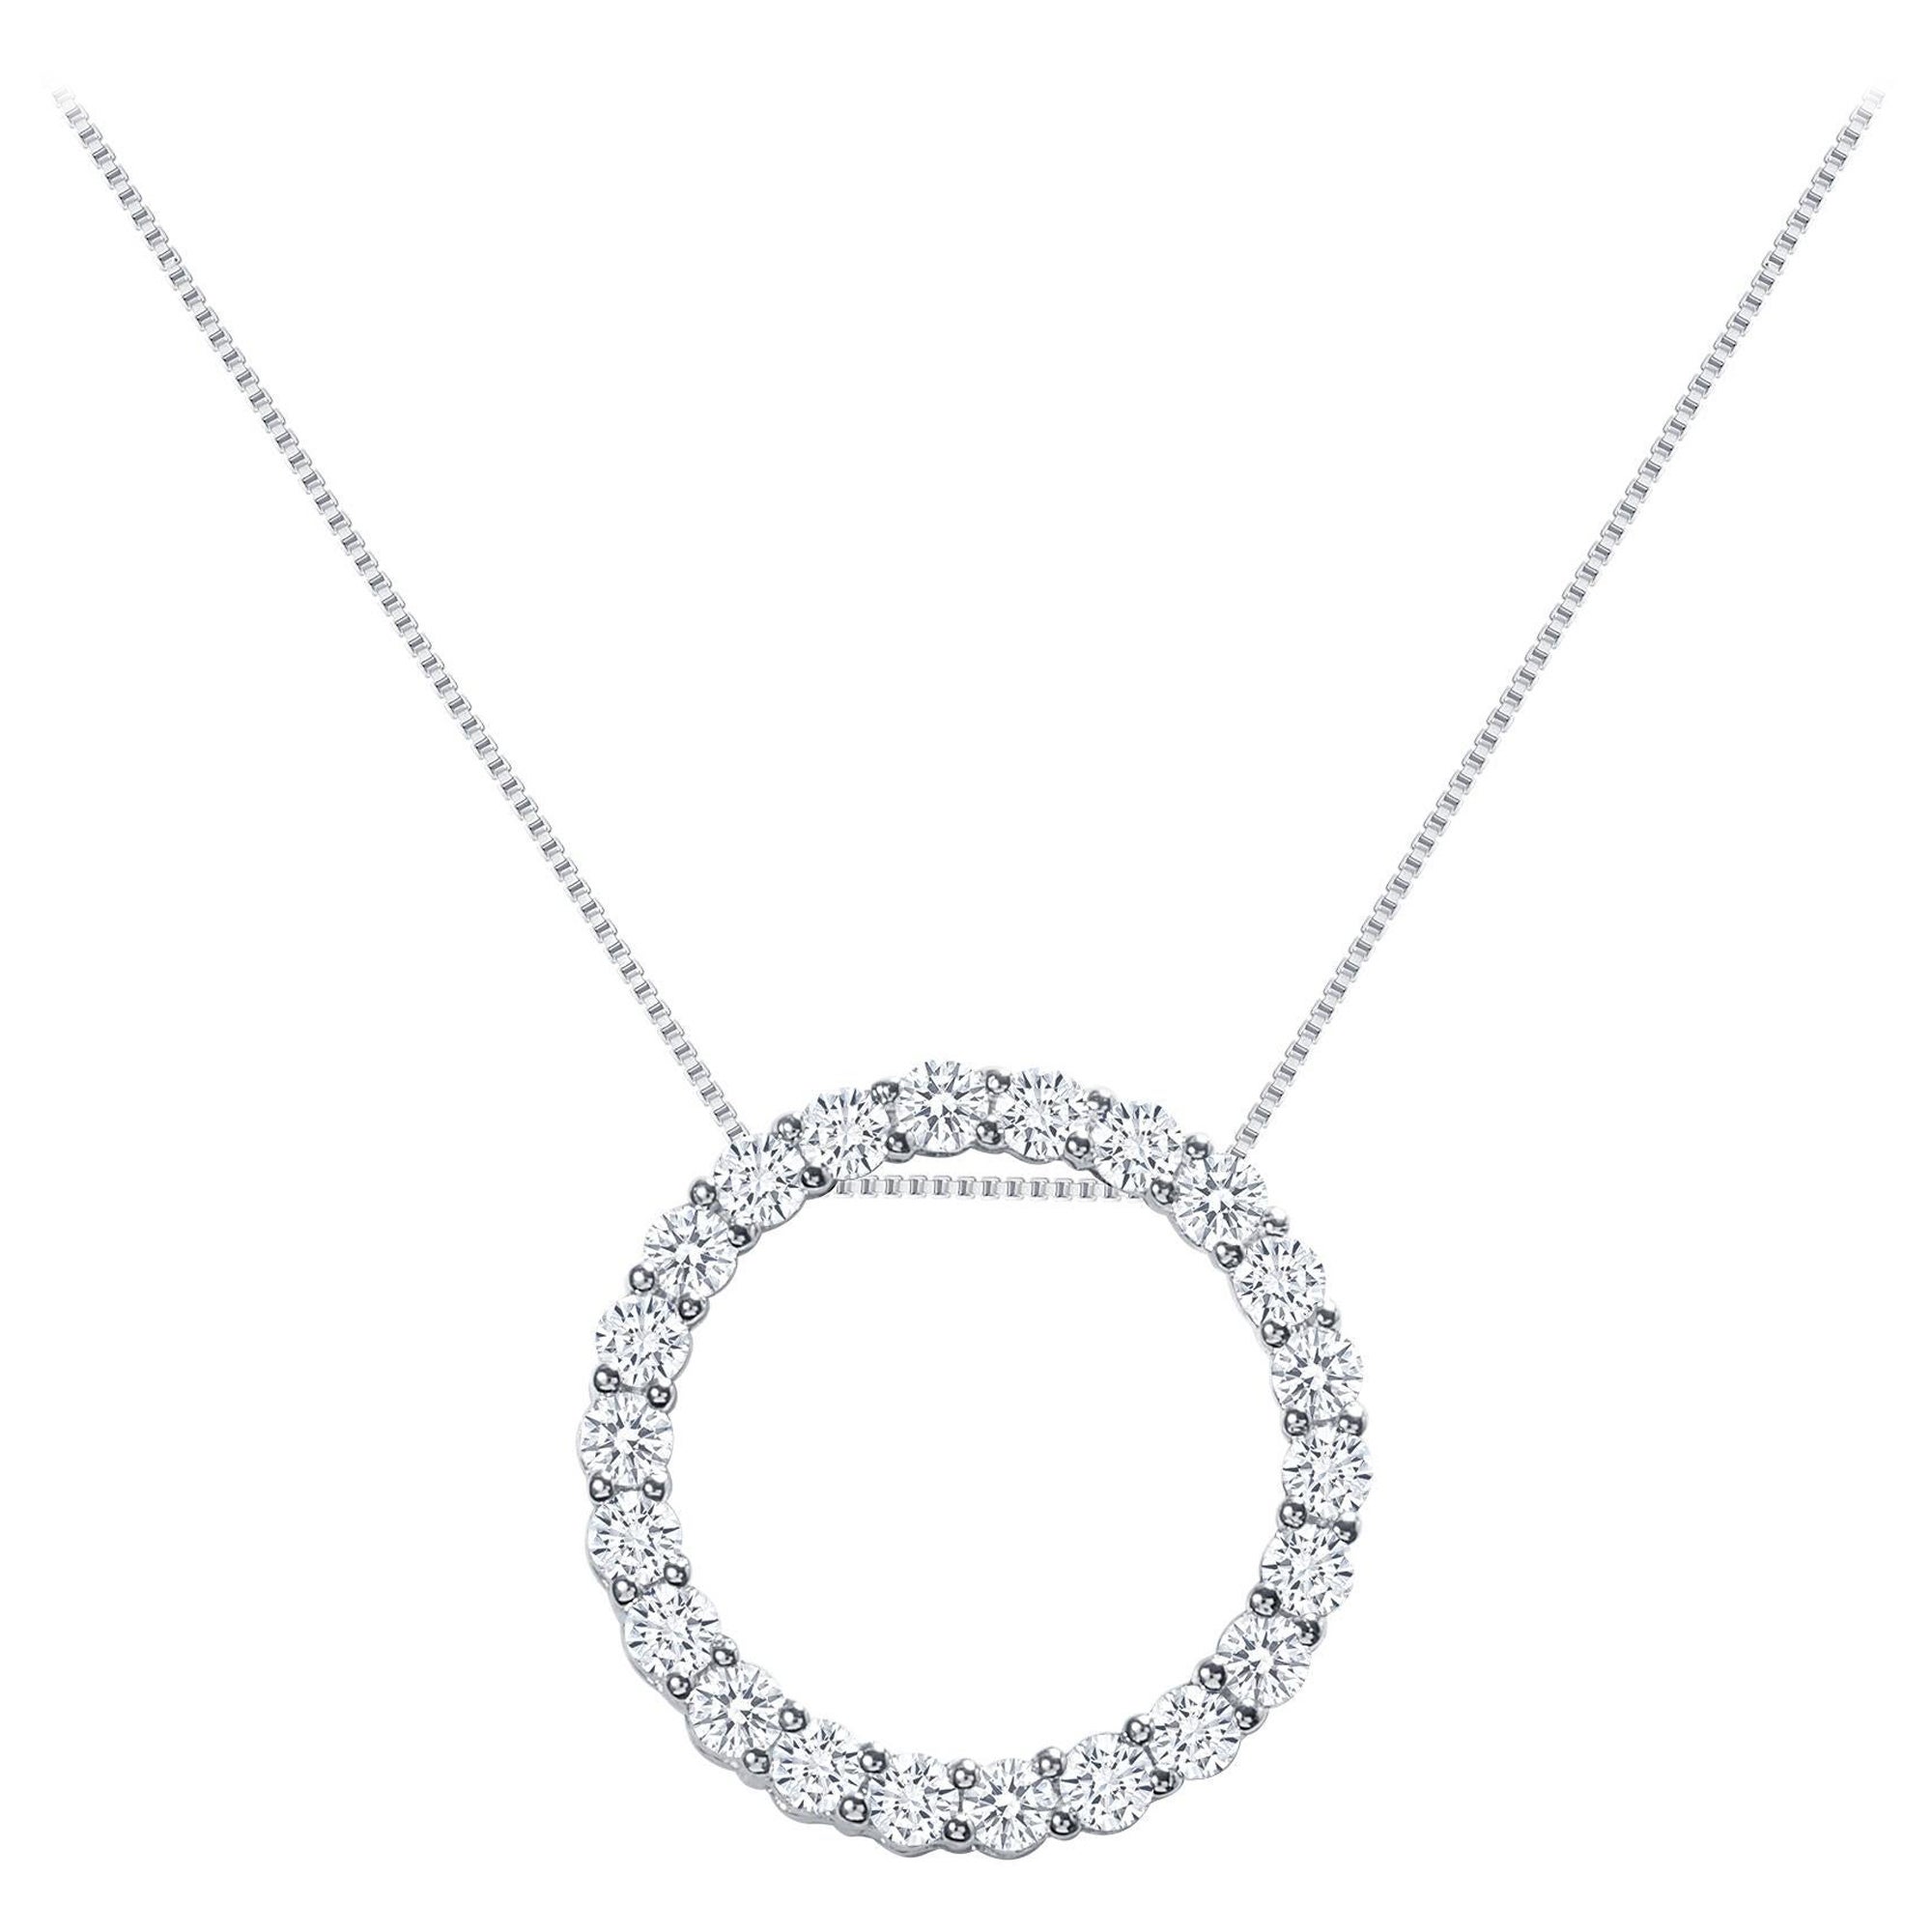 1 Carat White Gold Diamond Circle Pendant Necklace